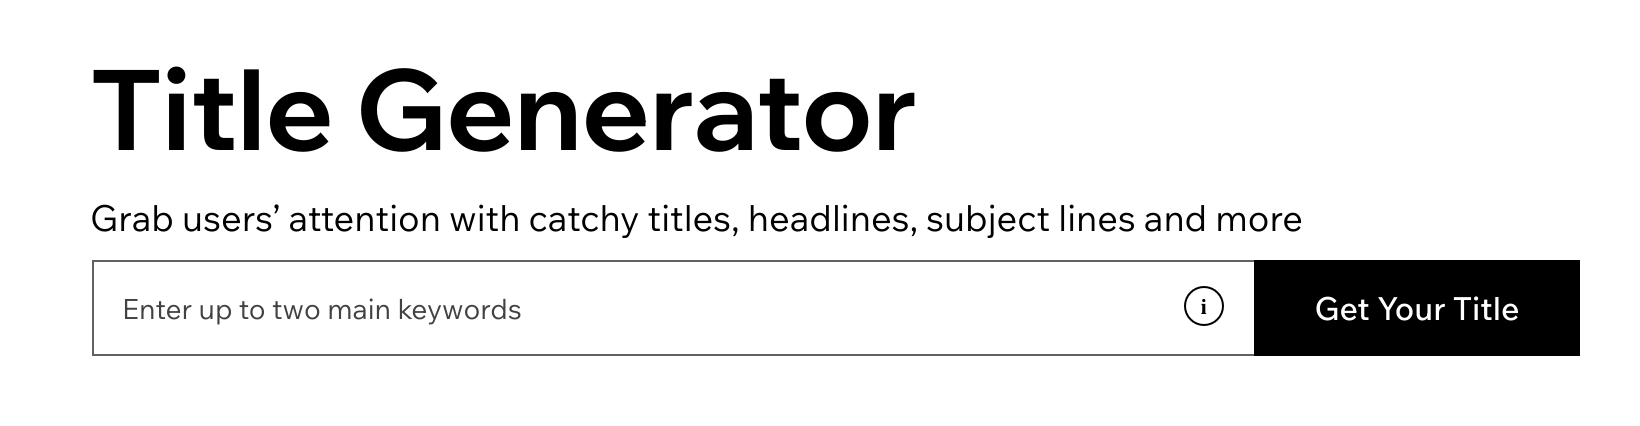 Title generator